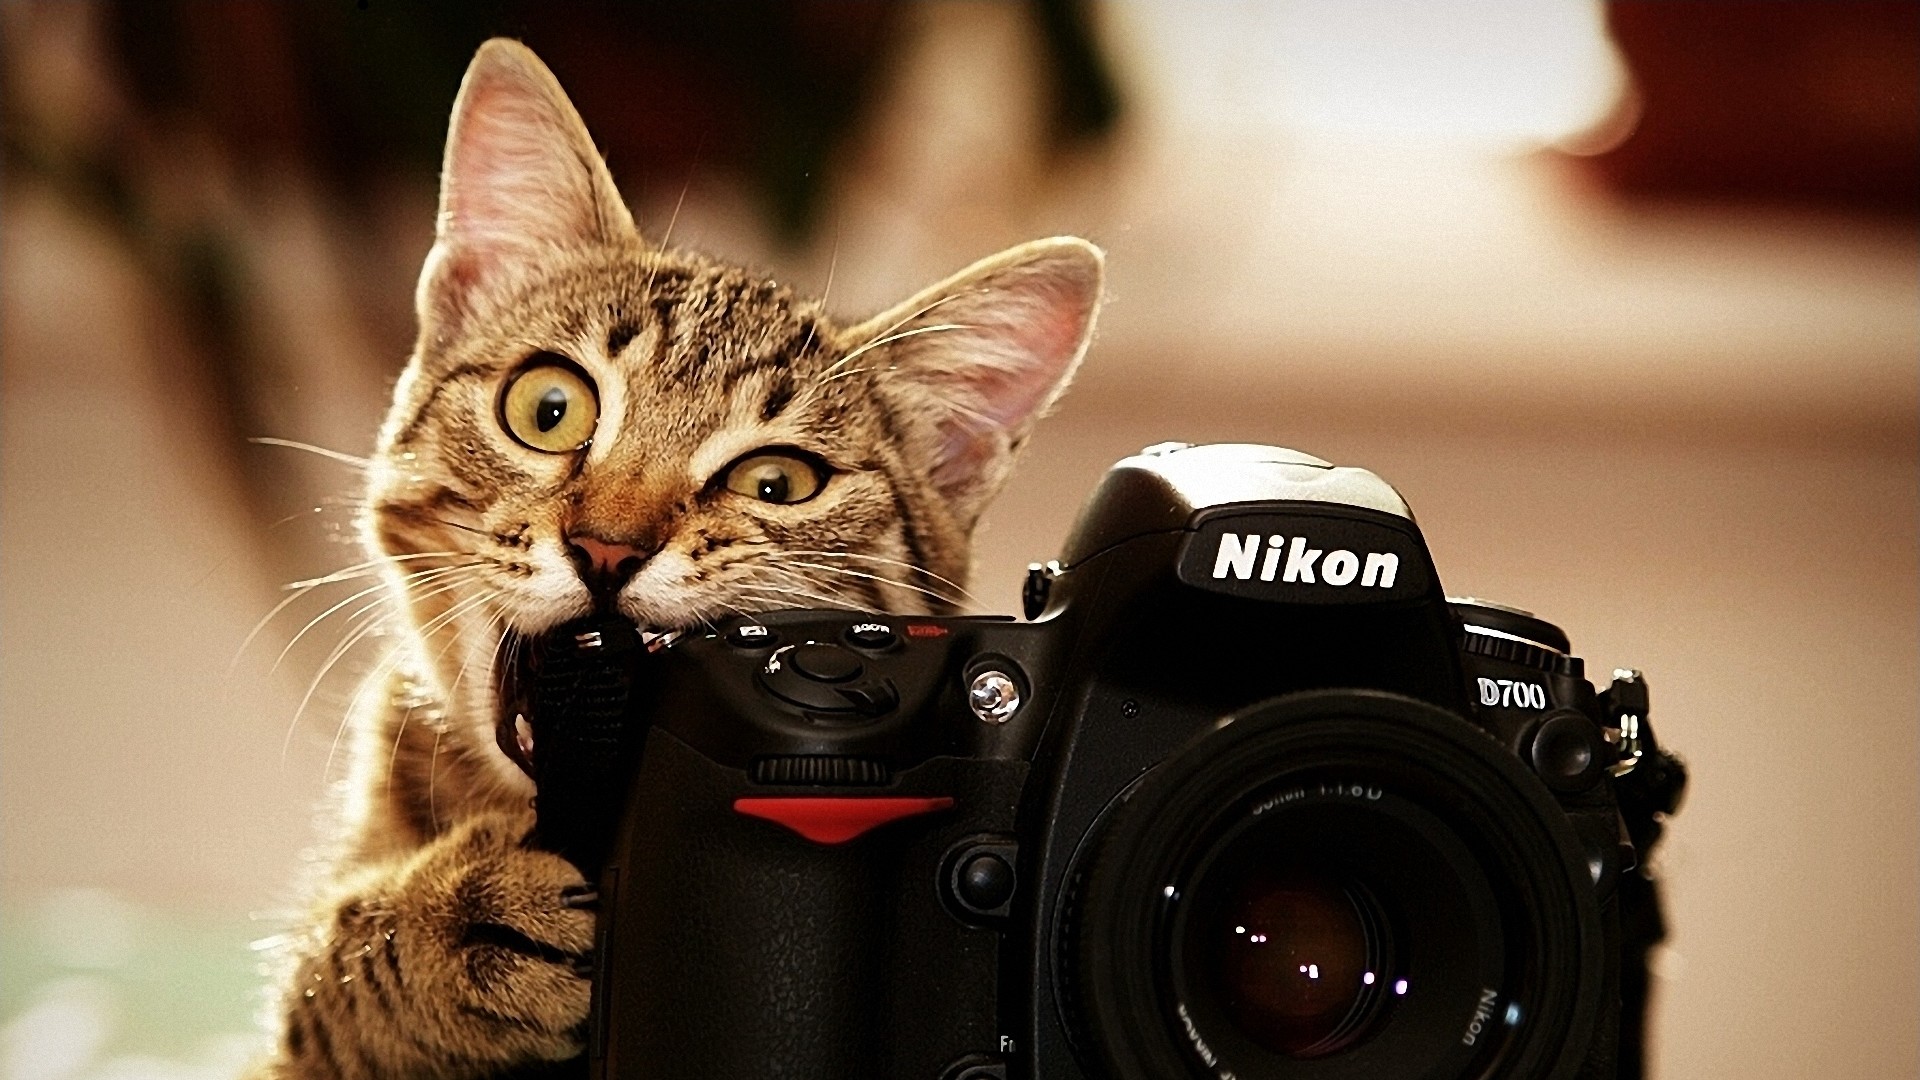 Cats bite funny cameras nikon kittens photo camera biting wallpaper |  | 7382 | WallpaperUP